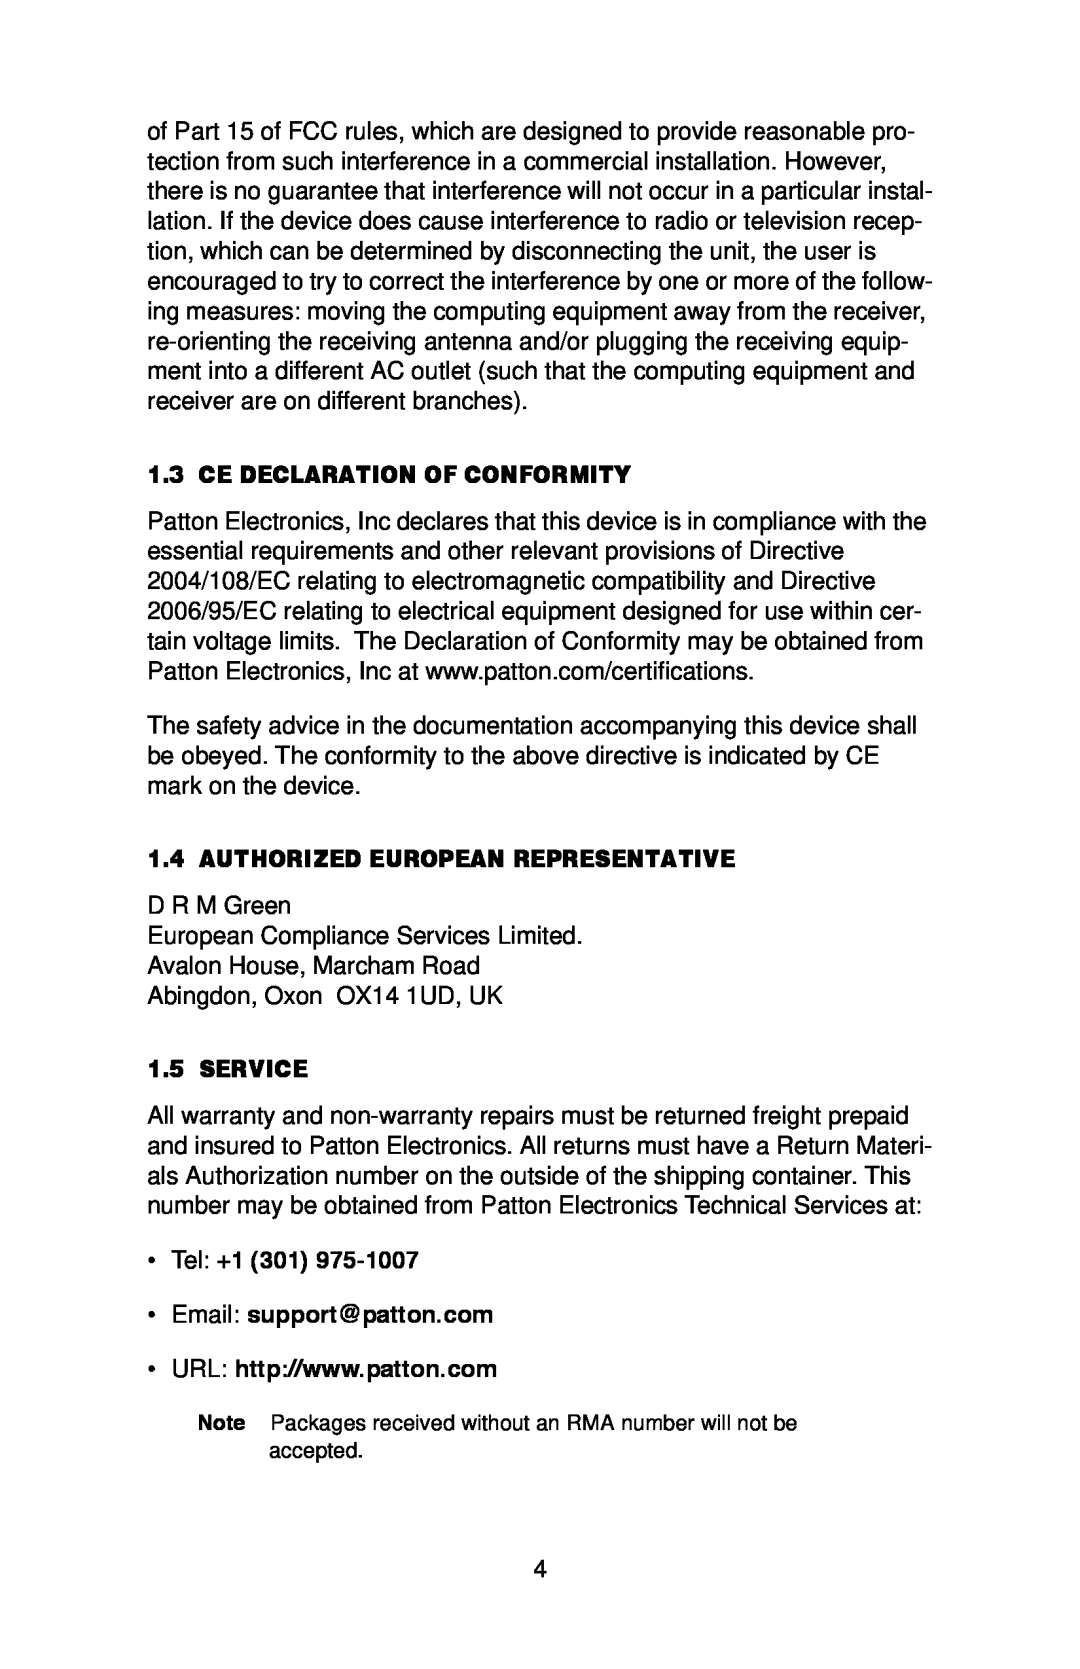 Patton electronic 1069 user manual Ce Declaration Of Conformity, Authorized European Representative, Service 